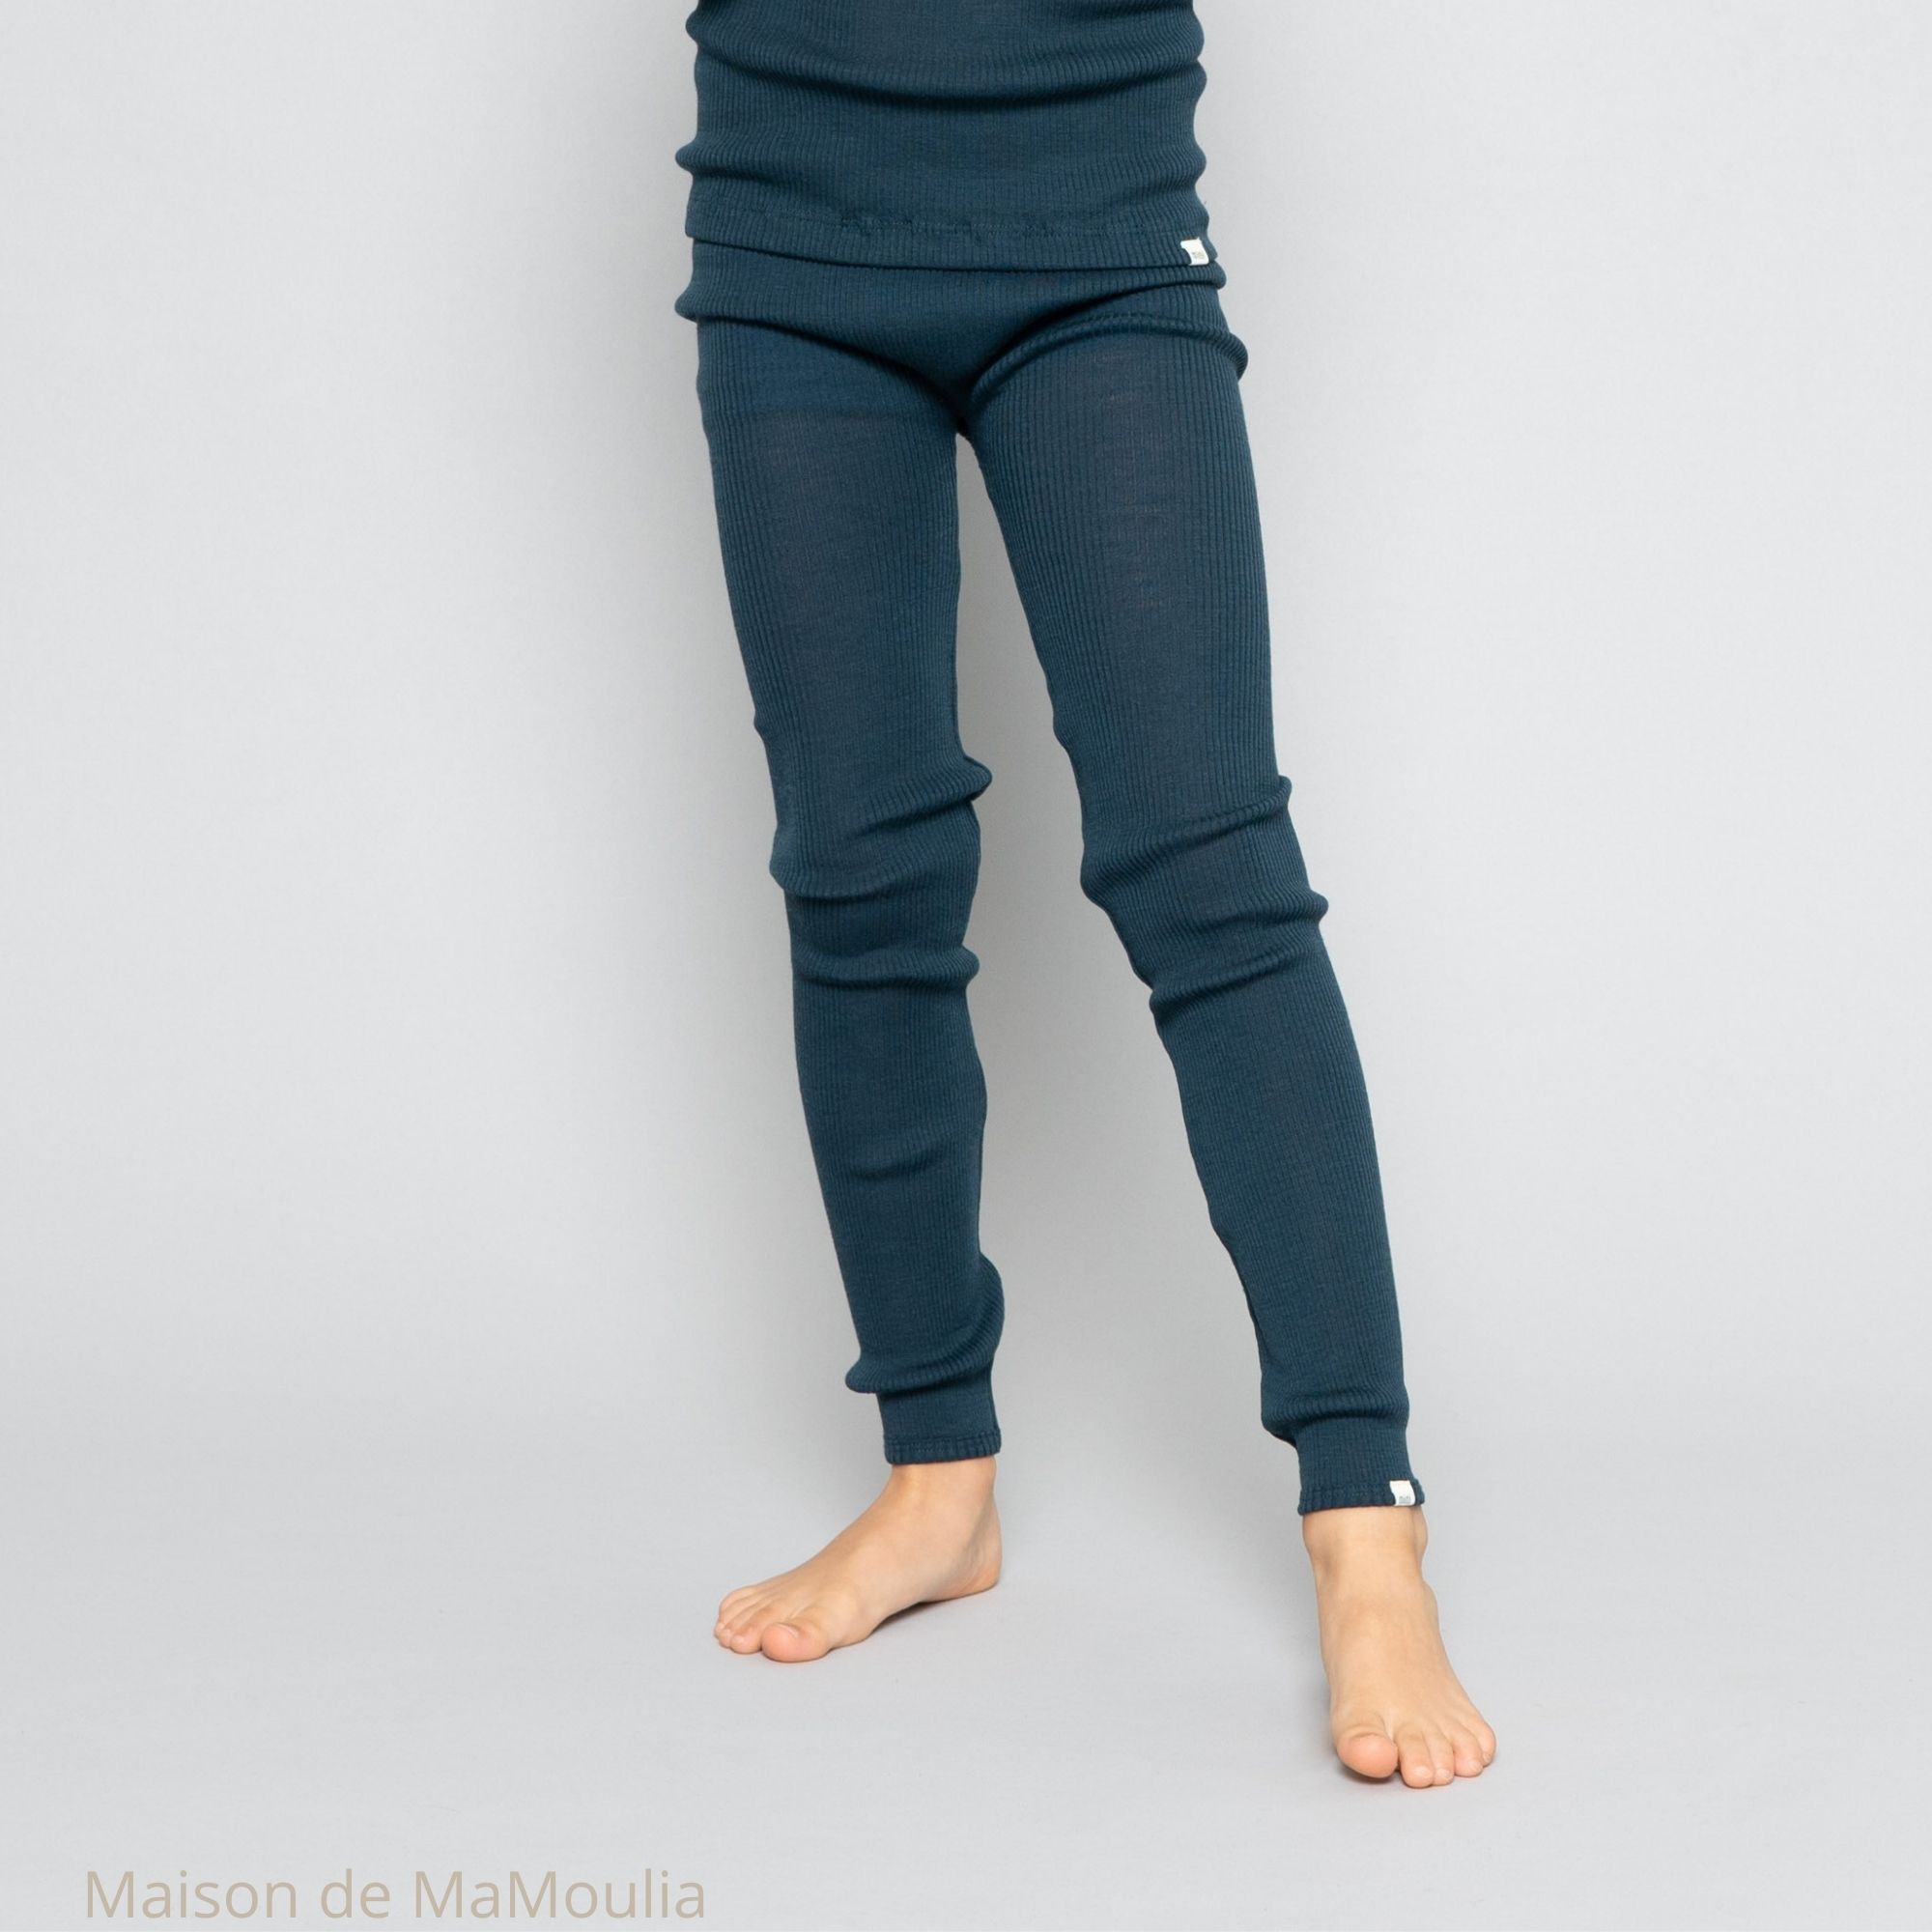 MINIMALISMA - Legging enfant - 100 % laine mérinos - Navy teal